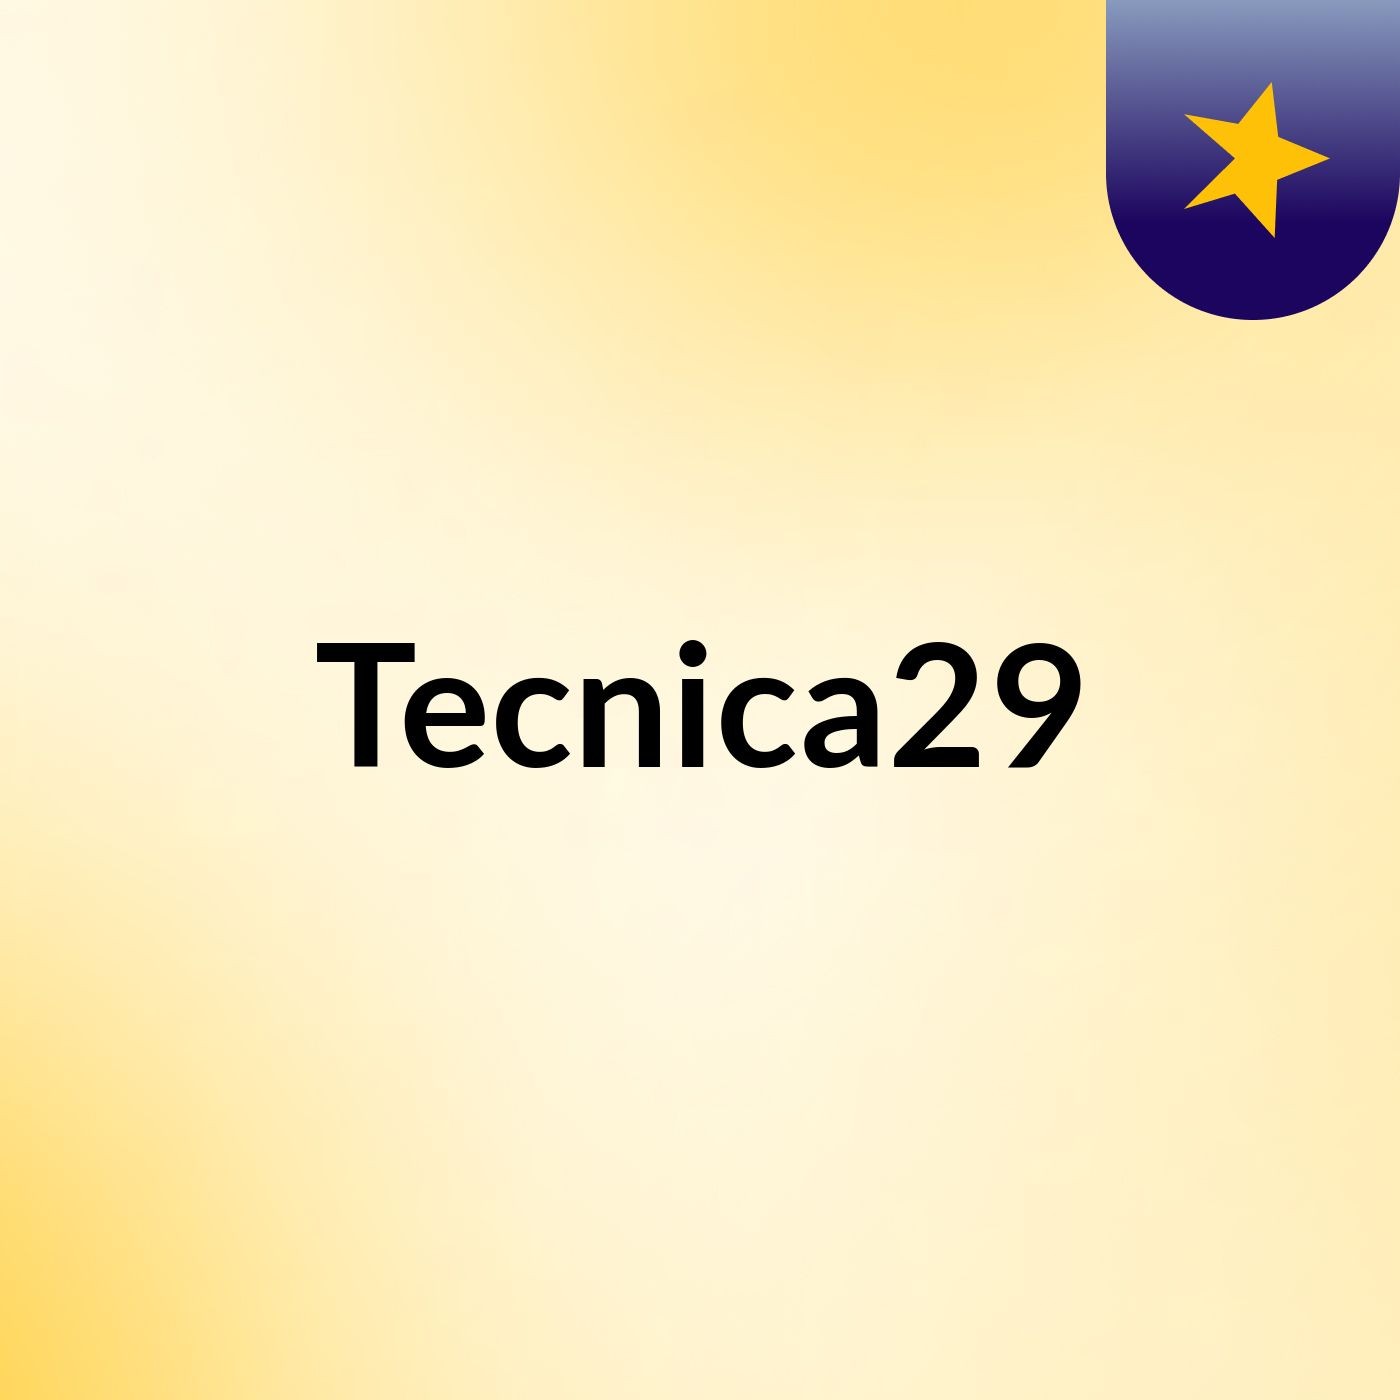 Tecnica29